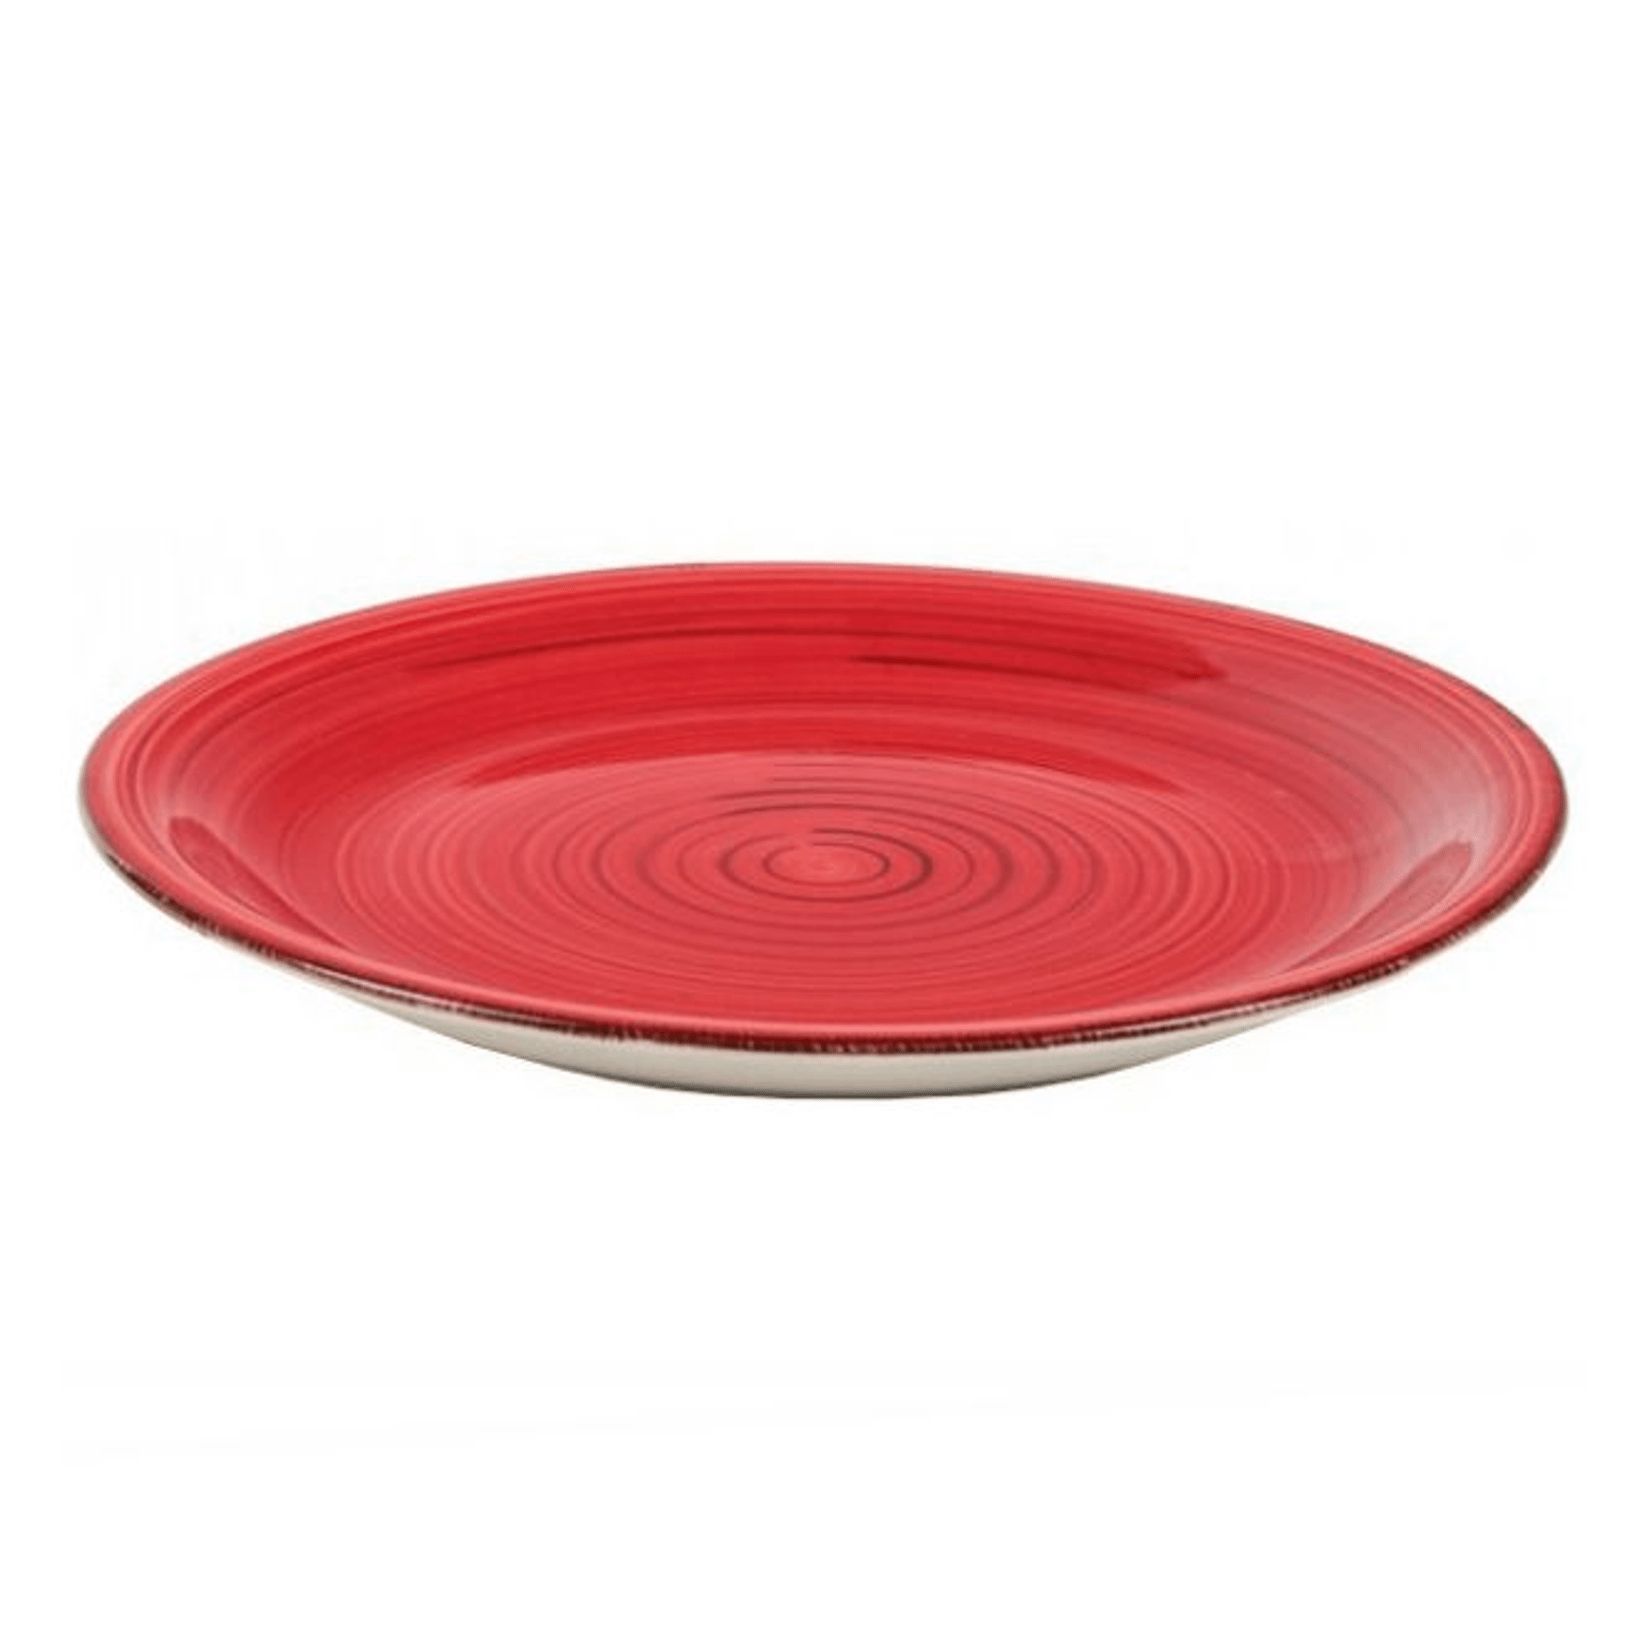 Тарелка обеденная SCARLET 26см DOMENIK DMD001 тарелка domenik scarlet 26см обеденная керамика